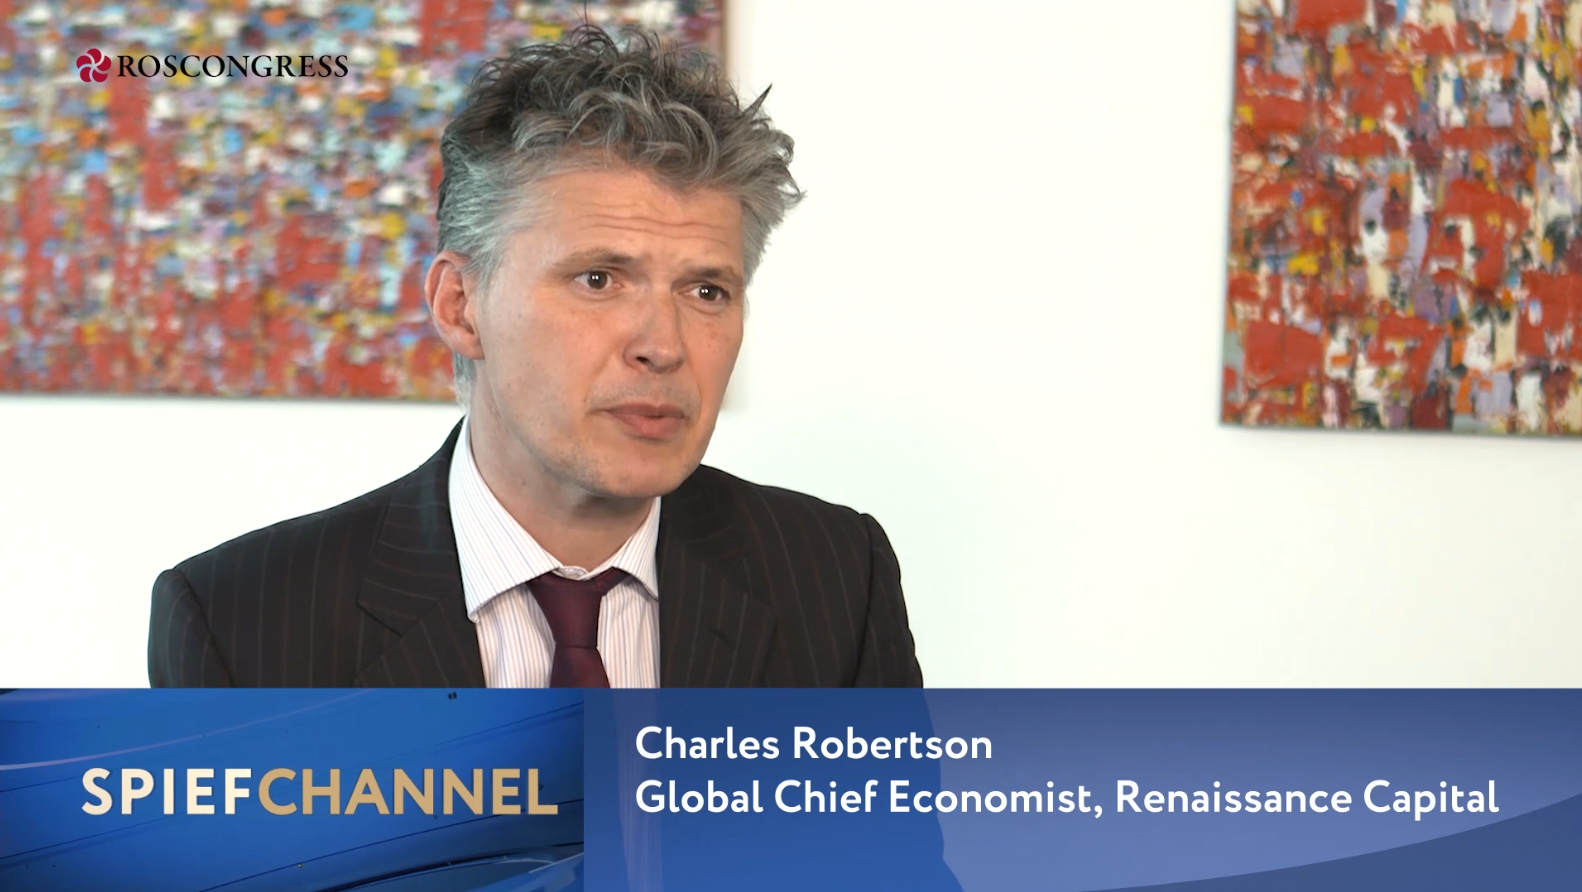 Charles Robertson, Global Chief Economist, Renaissance Capital